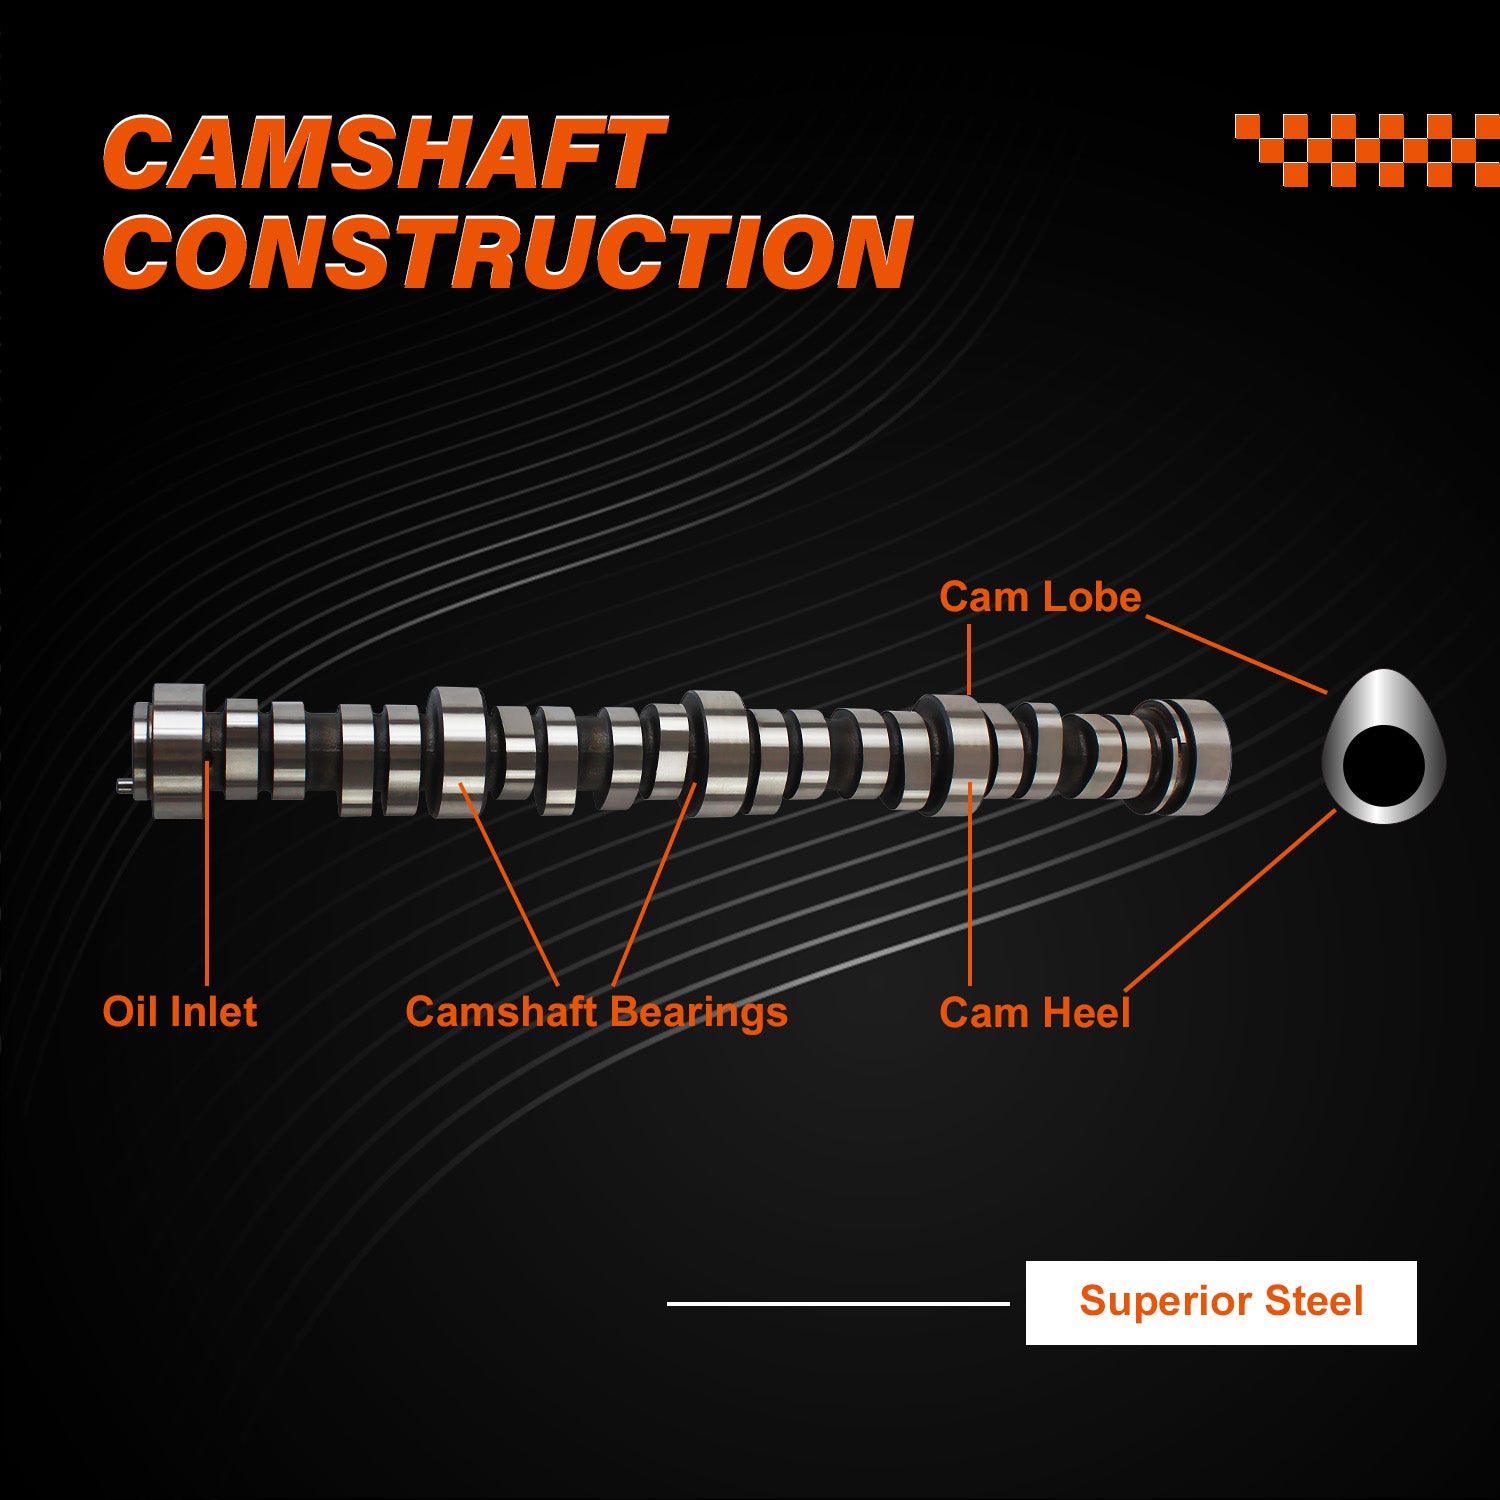 Camshaft Construction